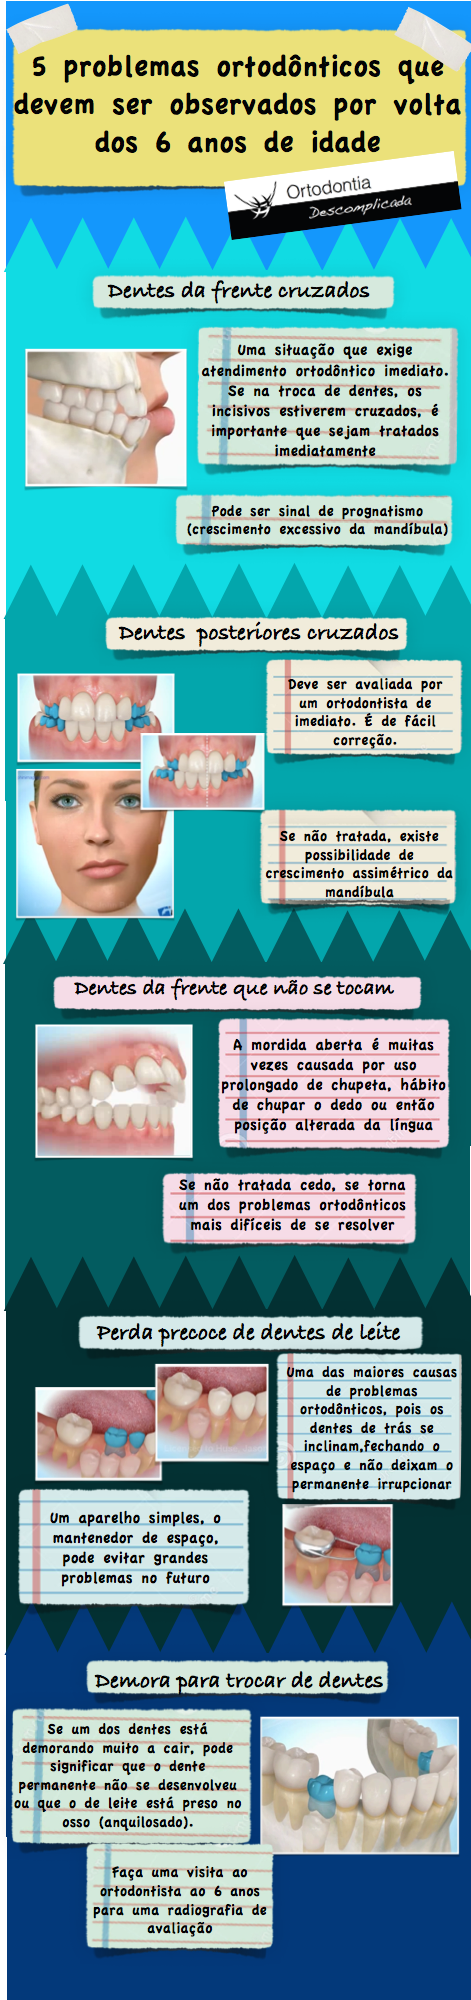 infografico problemas ortodonticos